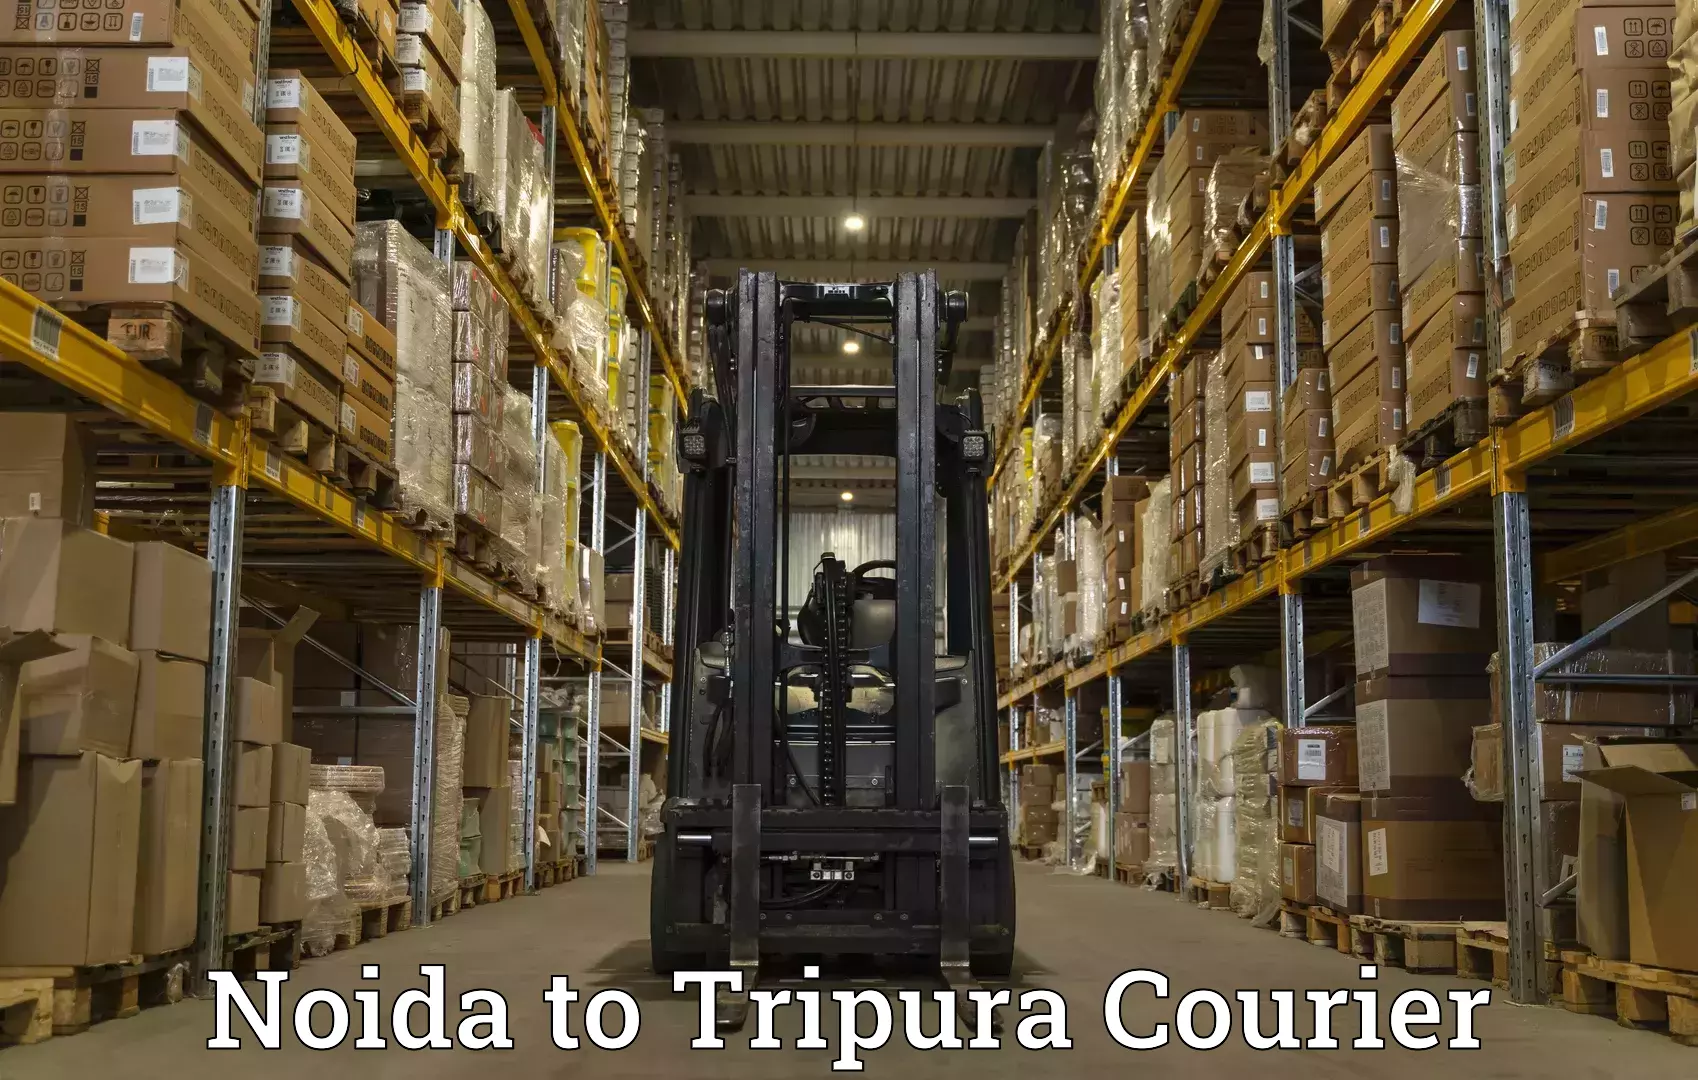 Logistics service provider Noida to Tripura